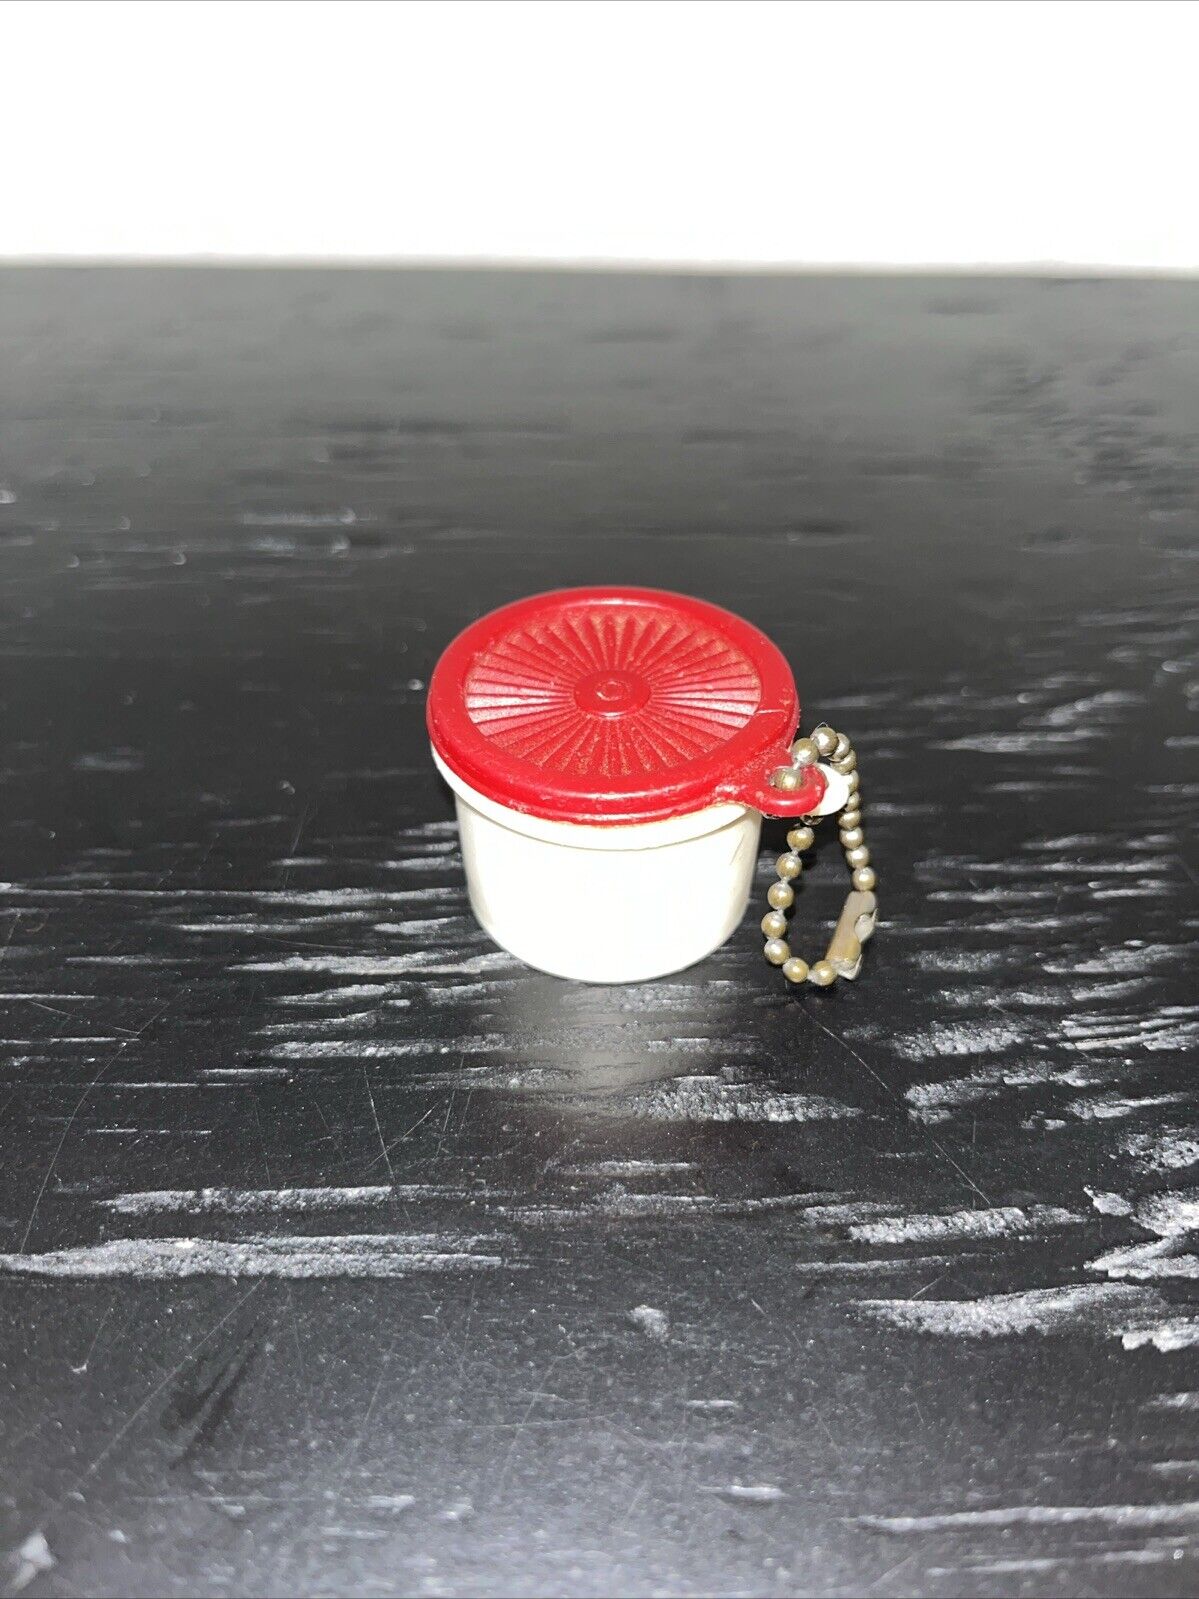 Tupperware keychain Mini servelier Canister RARE Red Lid tinietreasure